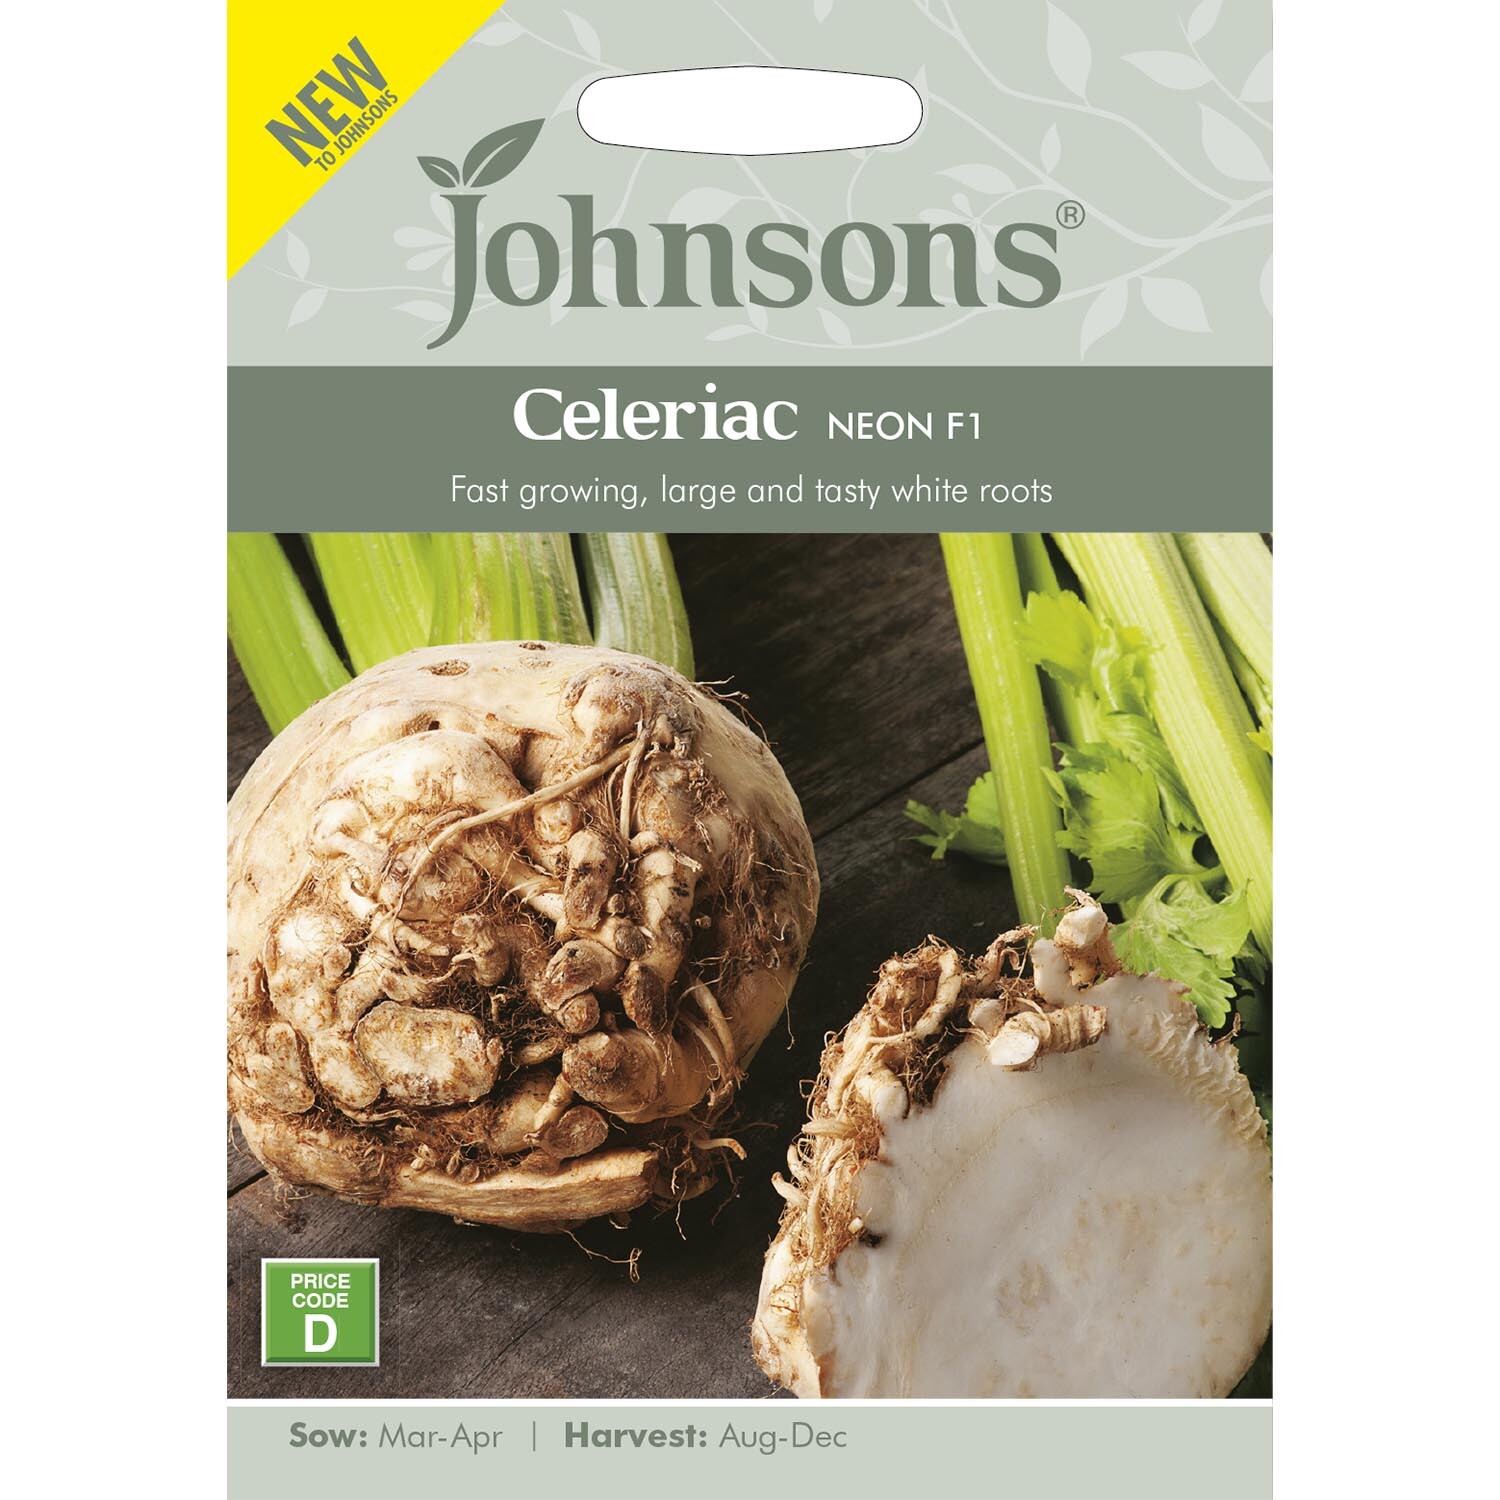 Johnsons Celeriac Neon F1 Vegetable Seeds Image 2